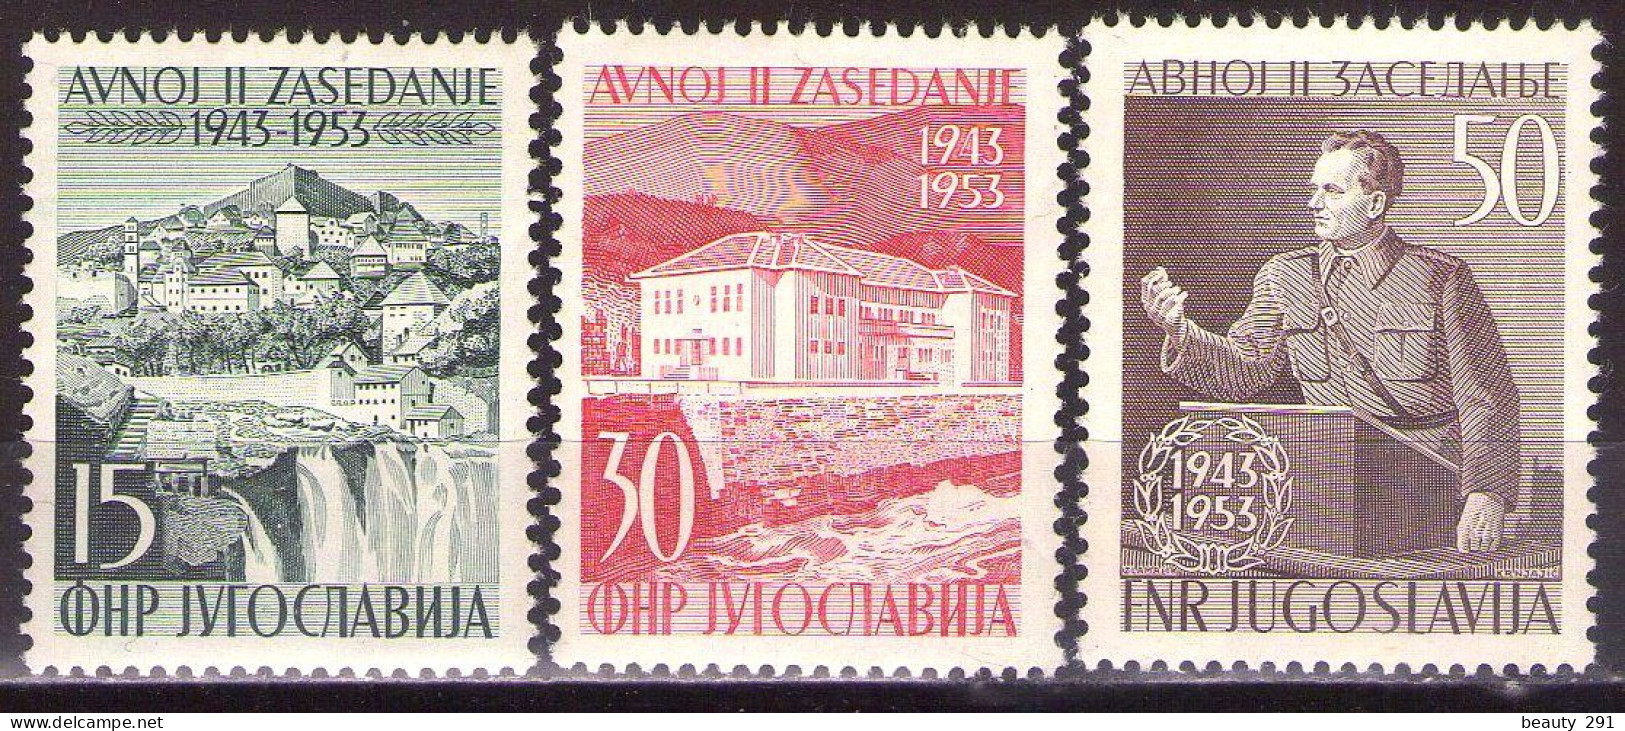 Yugoslavia 1953 -1st Republican Legislative Assembly AVNOJ II  - Mi 735-737 - MNH**VF - Neufs